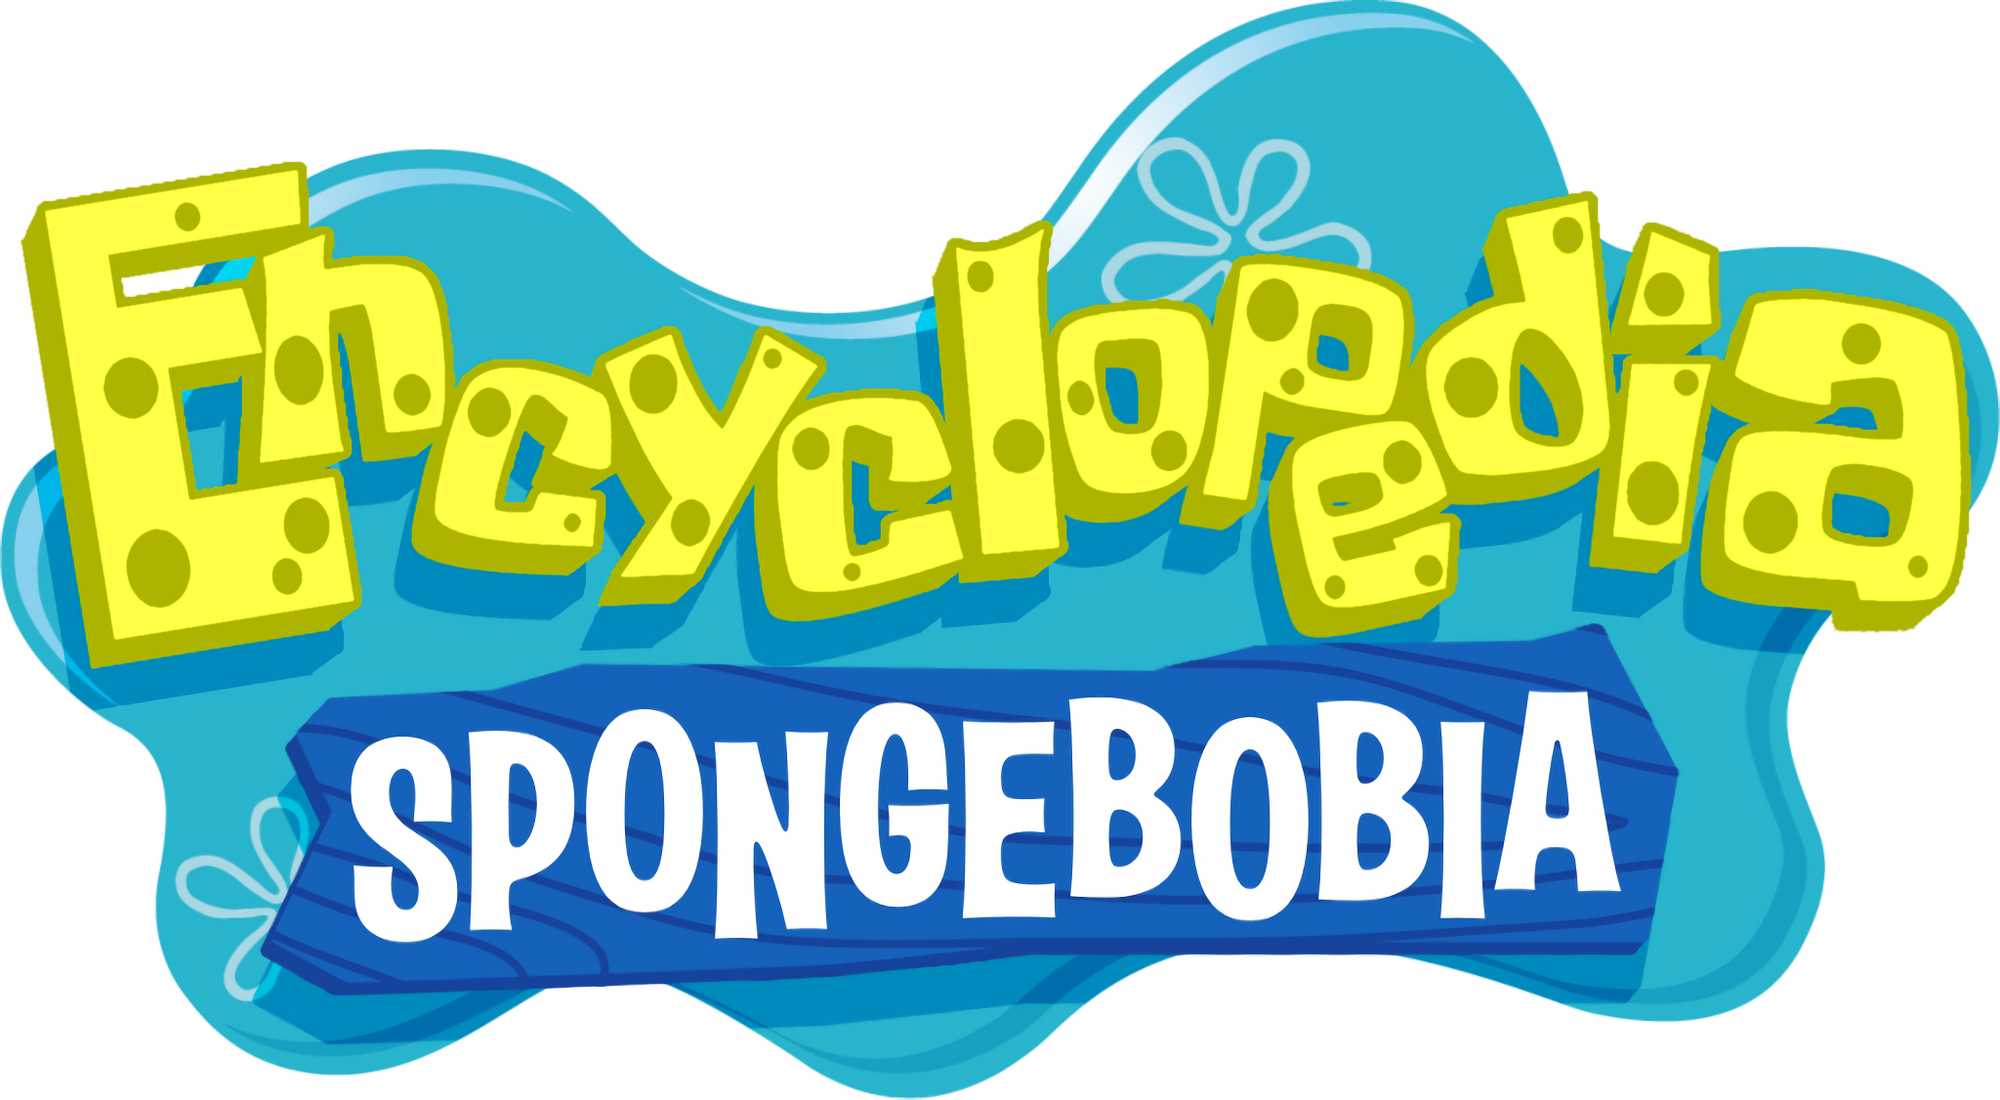 Encyclopedia Spongebobiamobile Encyclopedia Spongebobia Fandom